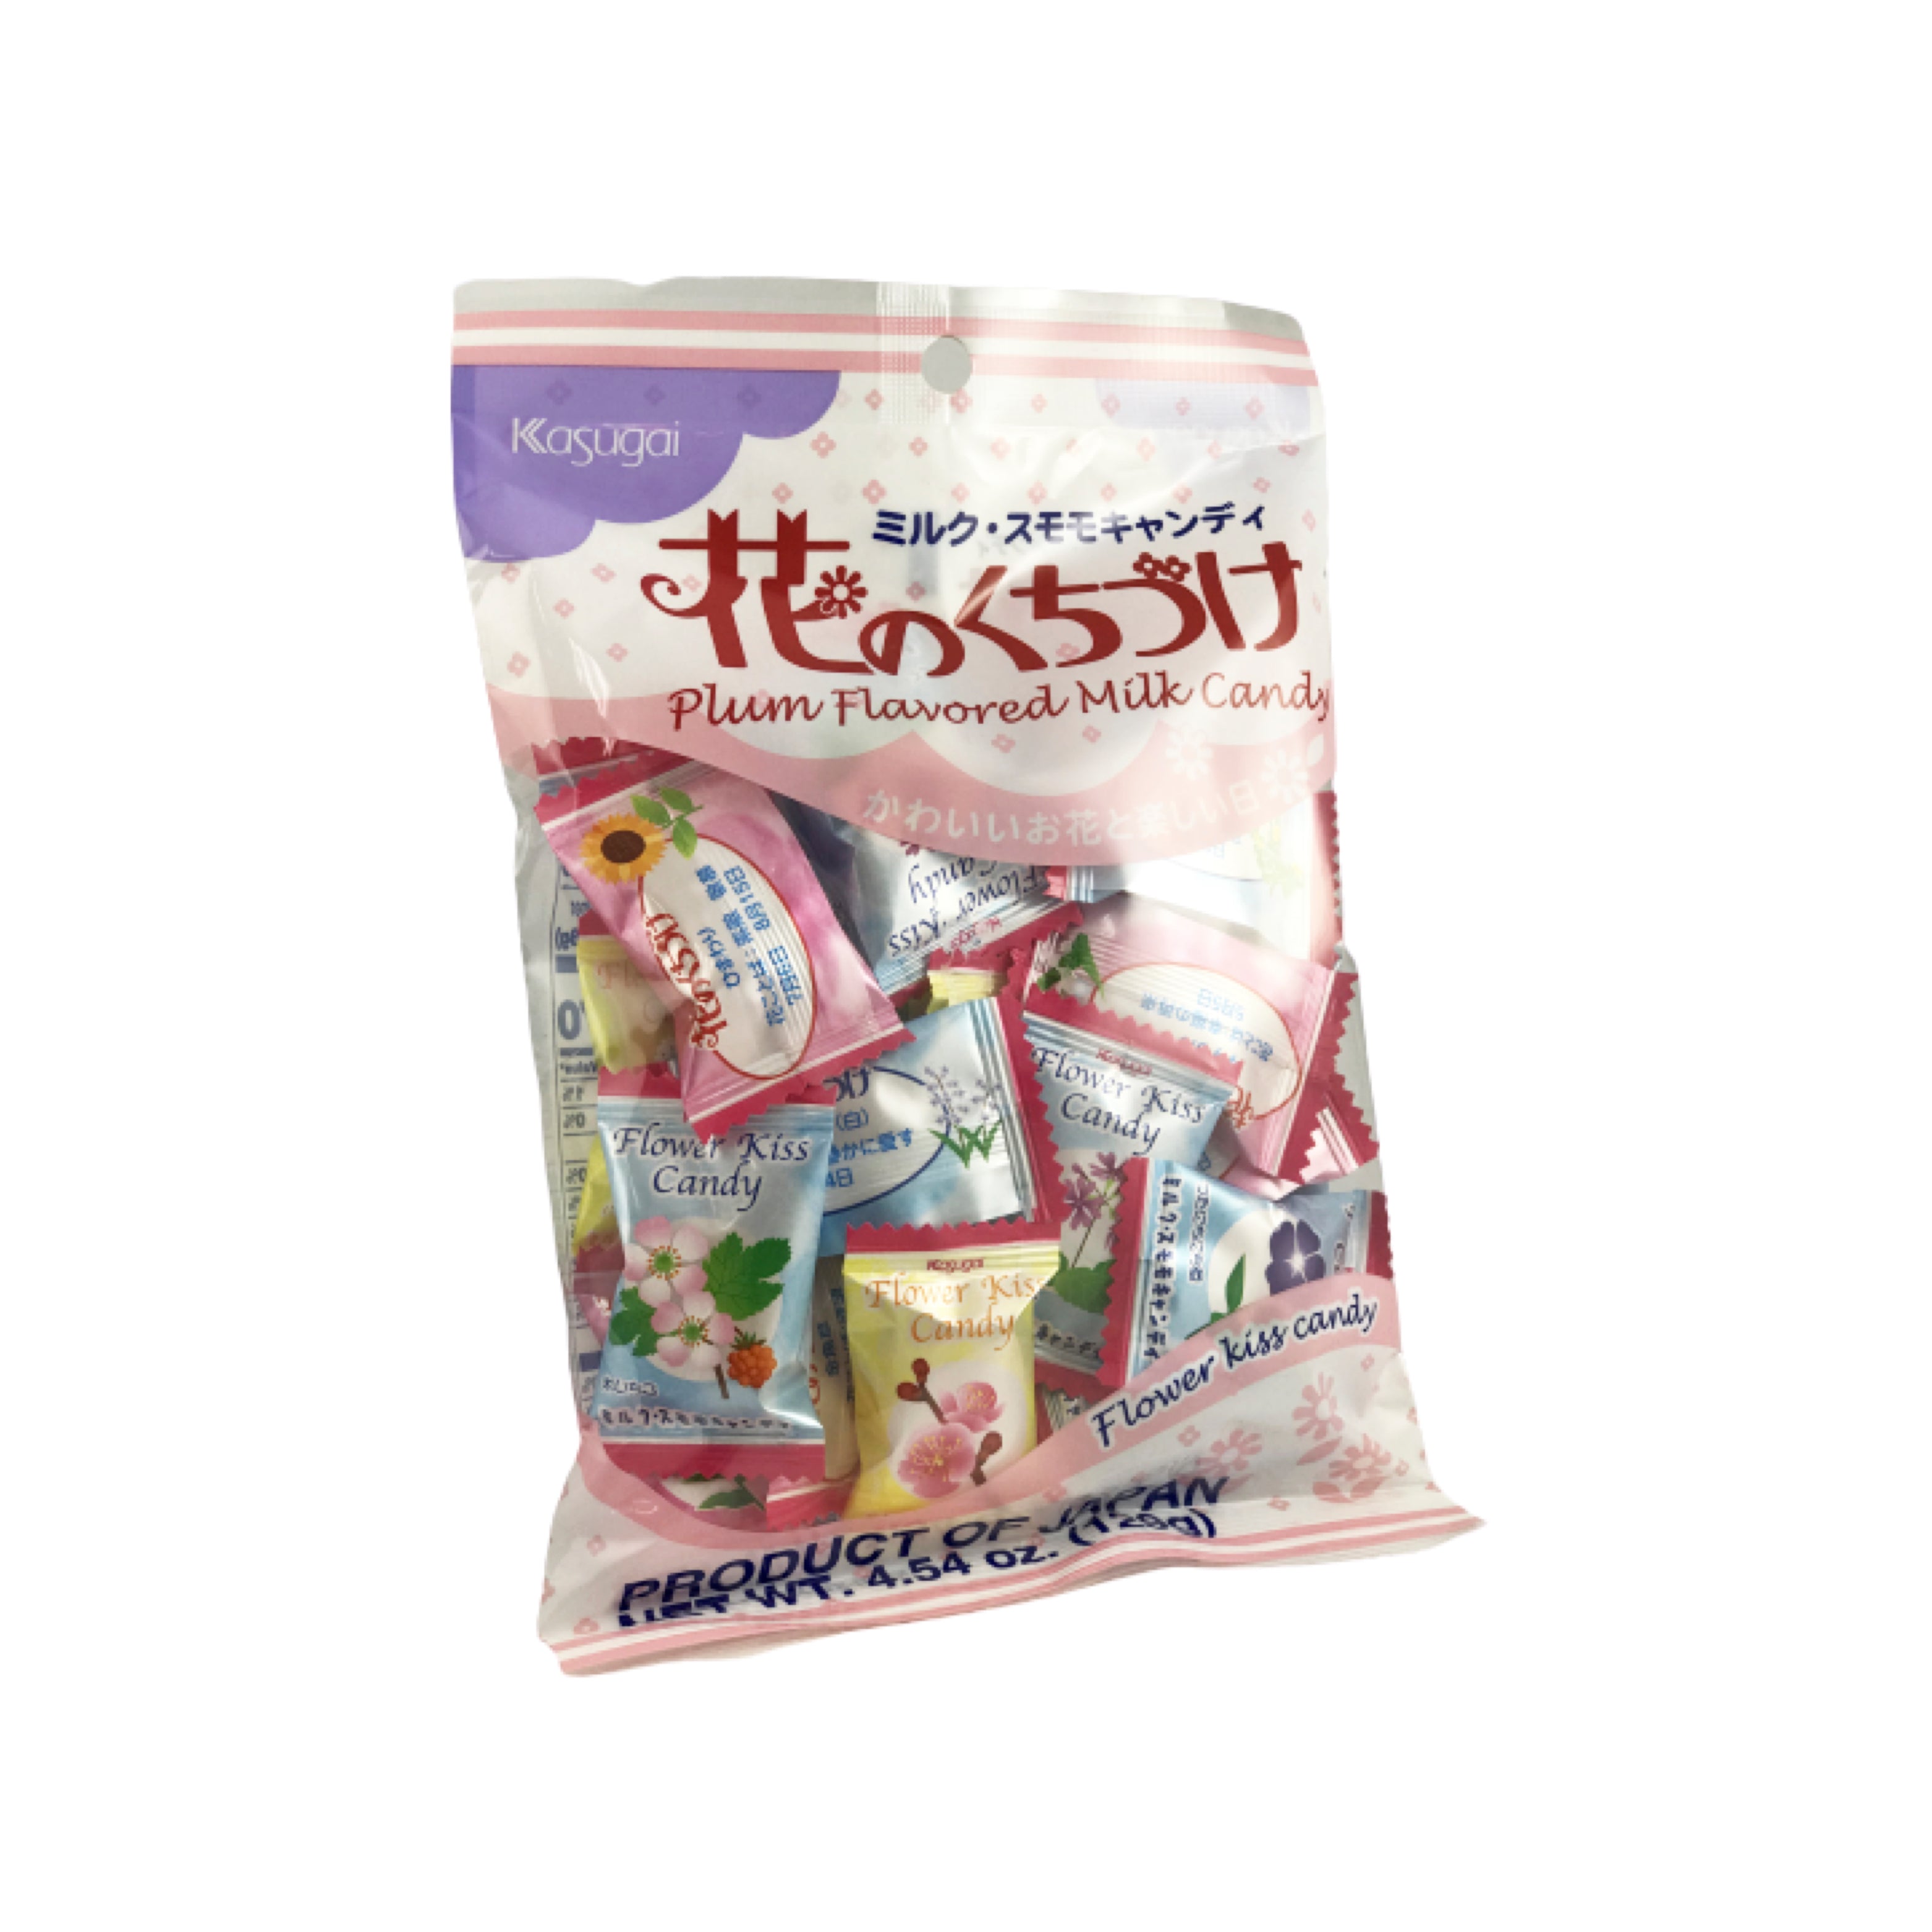 Kasugai Plum Flavored Milk Candy 4.54oz